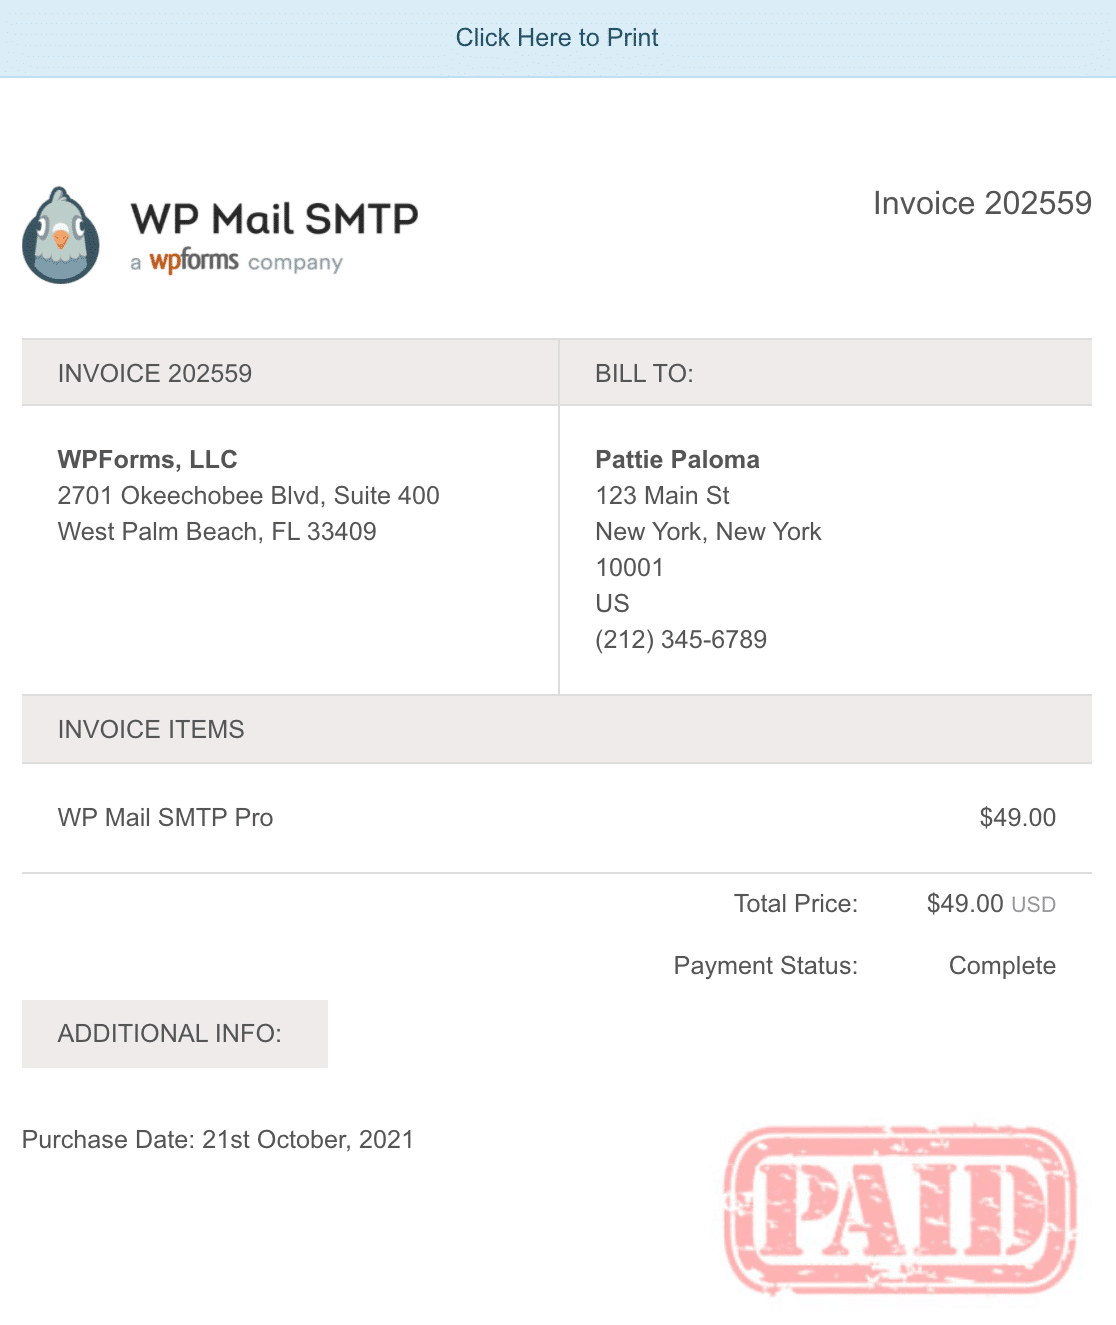 A WP Mail SMTP invoice